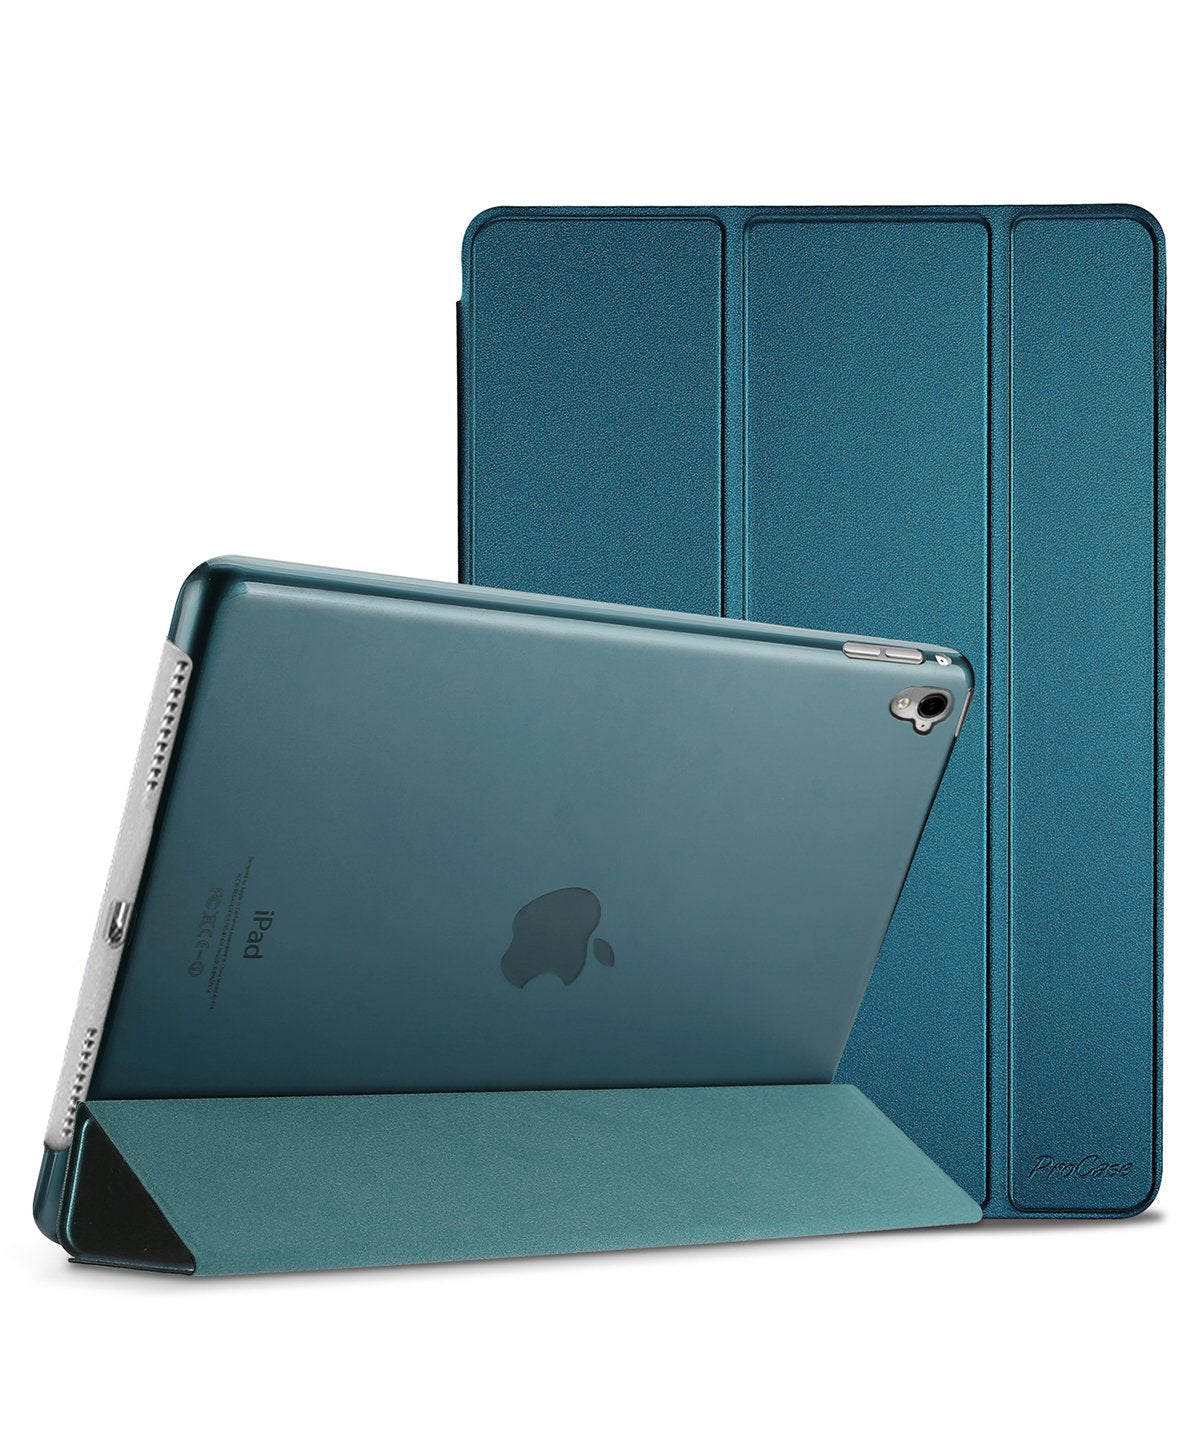 iPad Pro 9.7 2016 Slim Case | ProCase teal